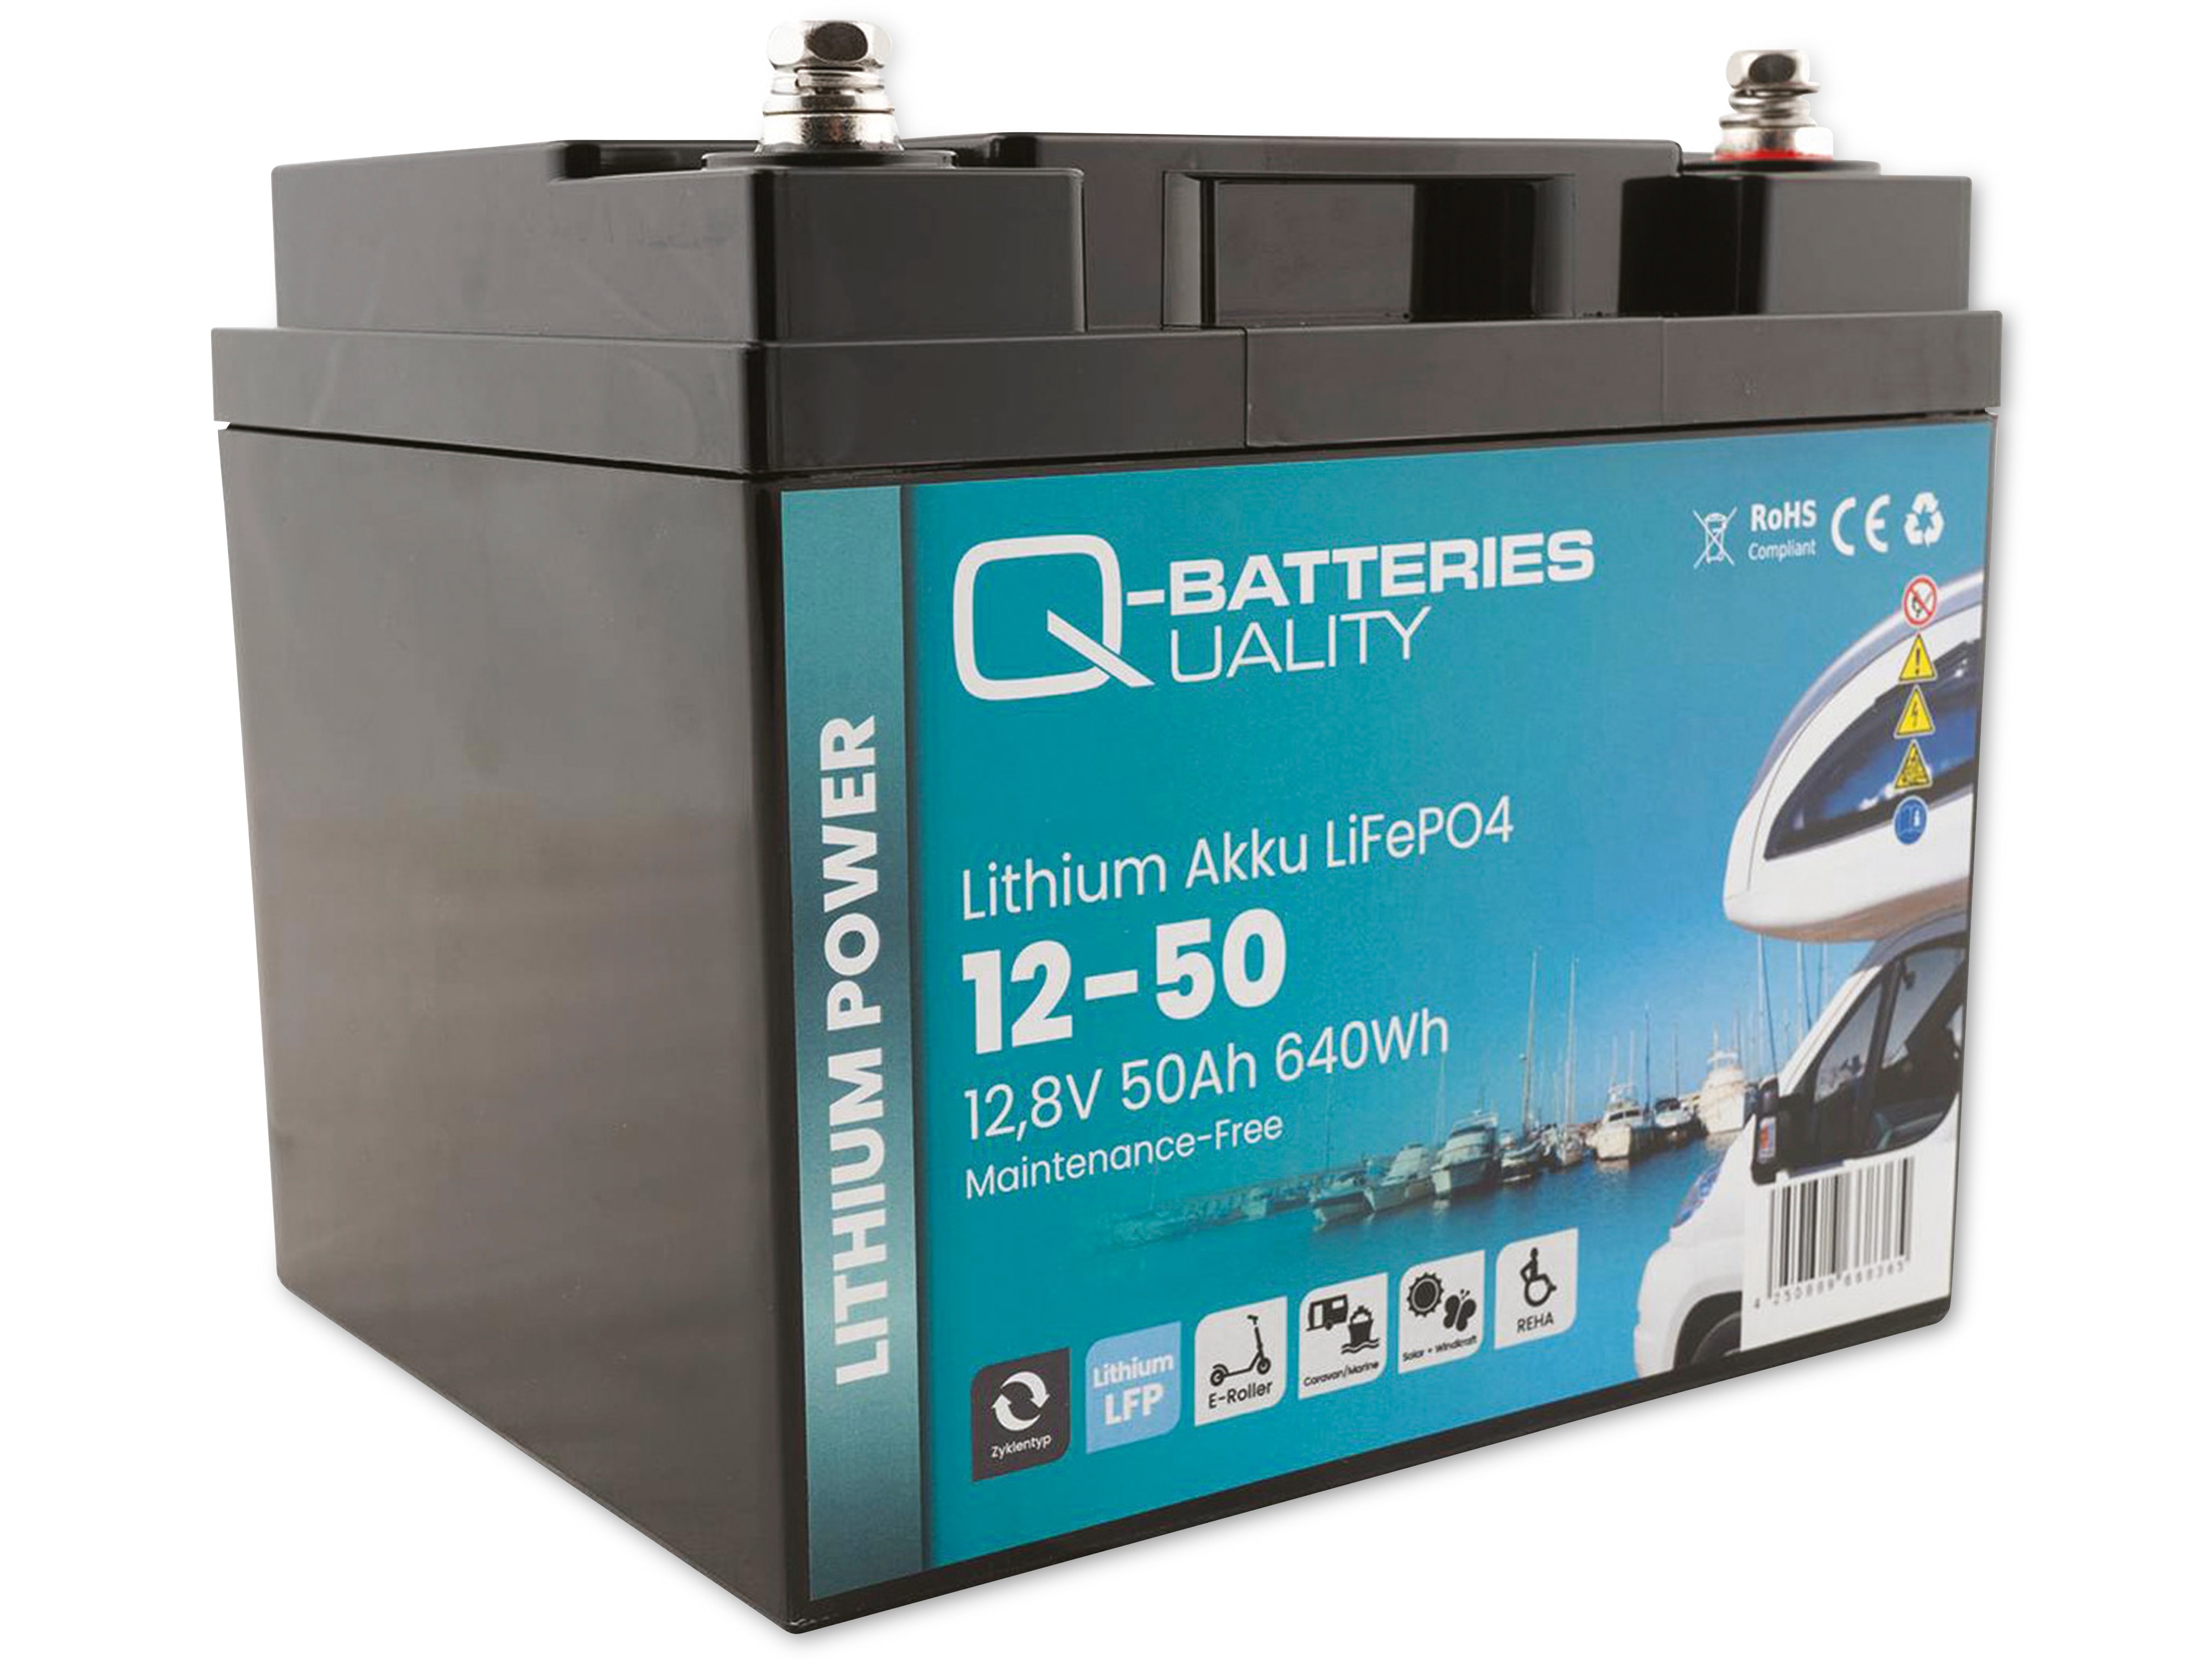 Q-BATTERIES Lithium Akku 12-50 12,8V, 50Ah 640Wh LiFePO4 Batterie